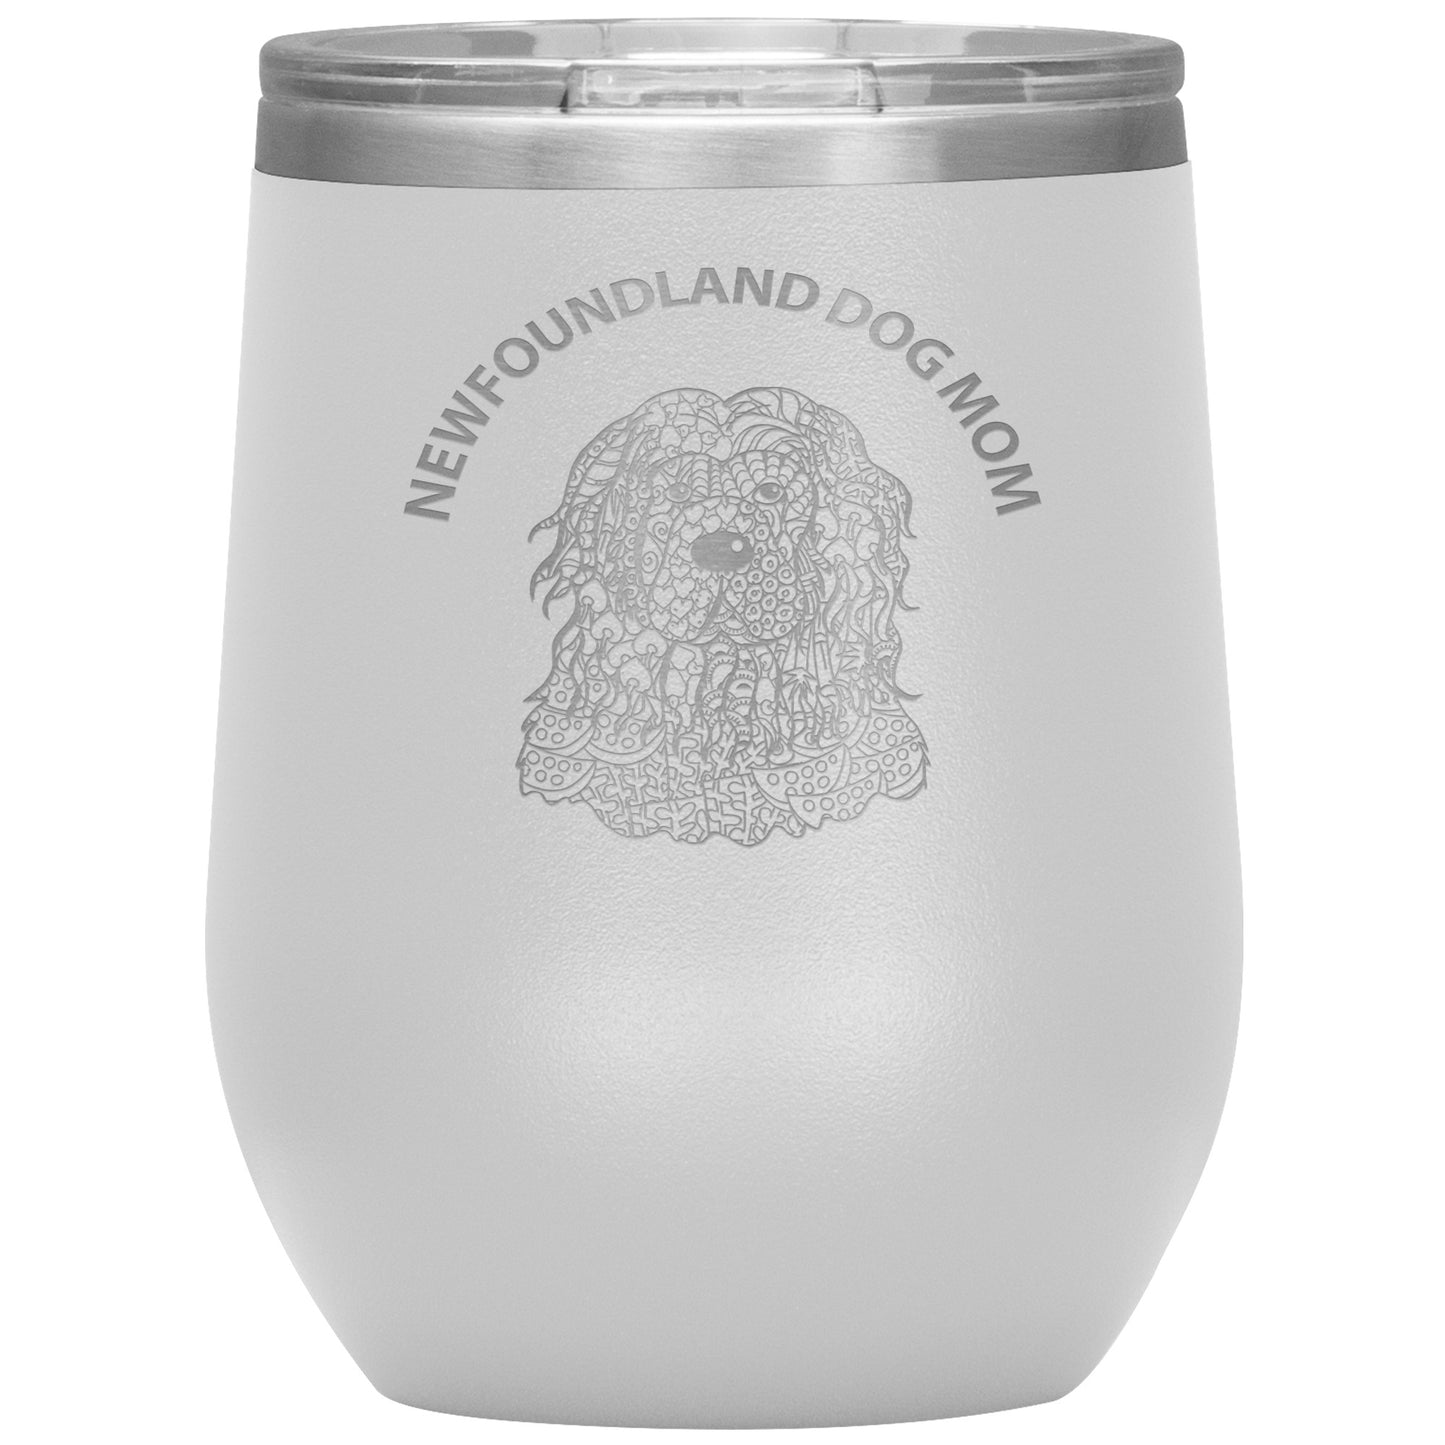 Newfoundland Dog (Newfie) Mom Design 12oz Insulated Stemless Wine Tumbler - Cindy Sang B&W